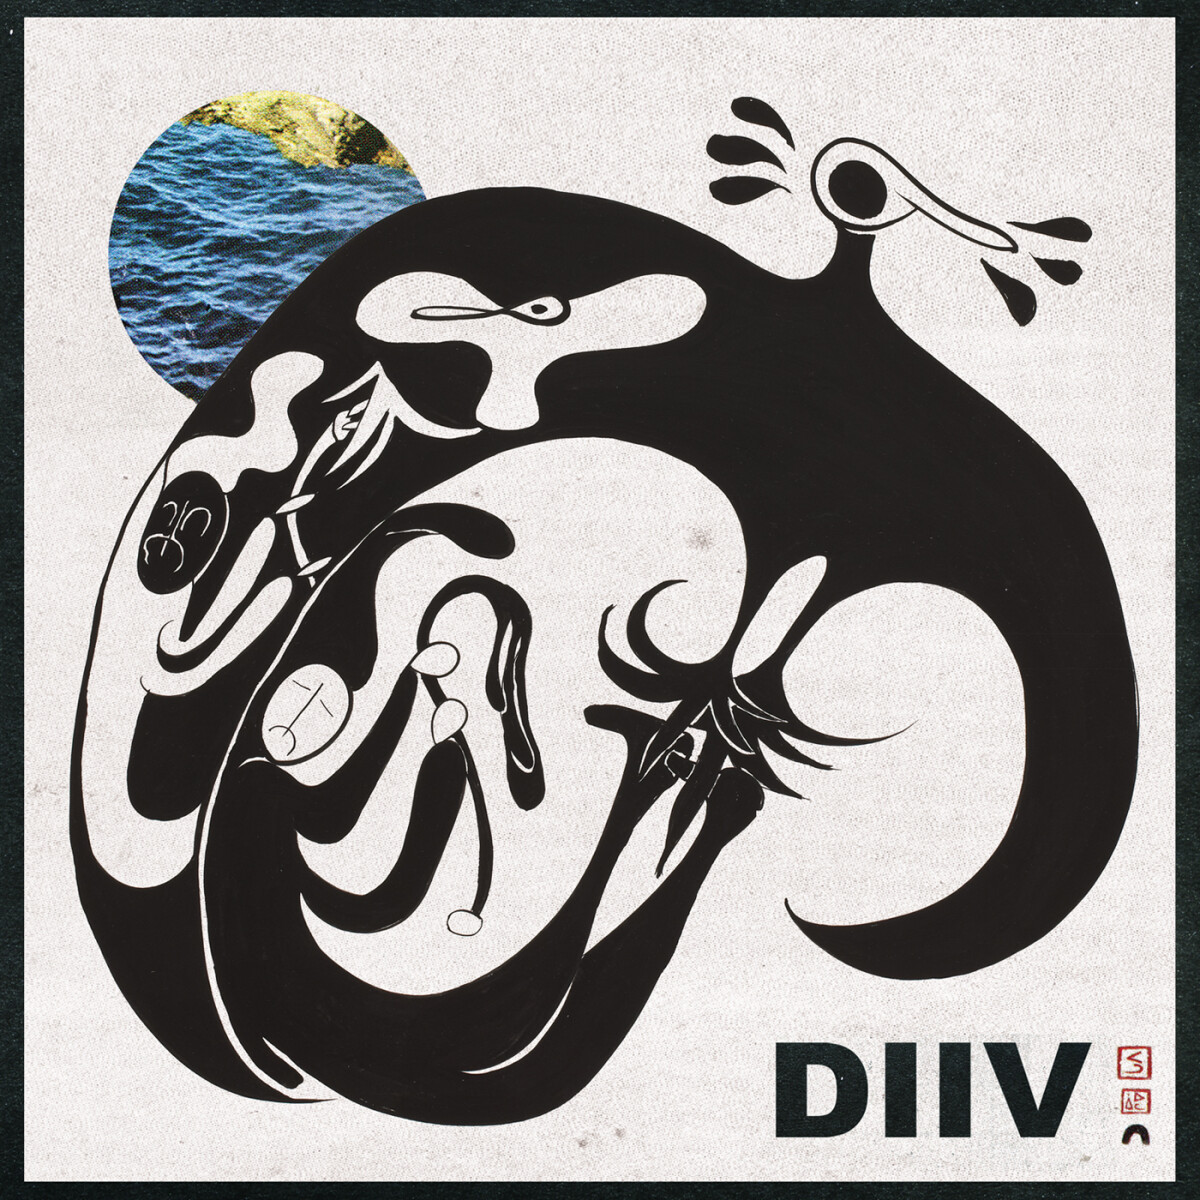 diiv-oshin-album-cover